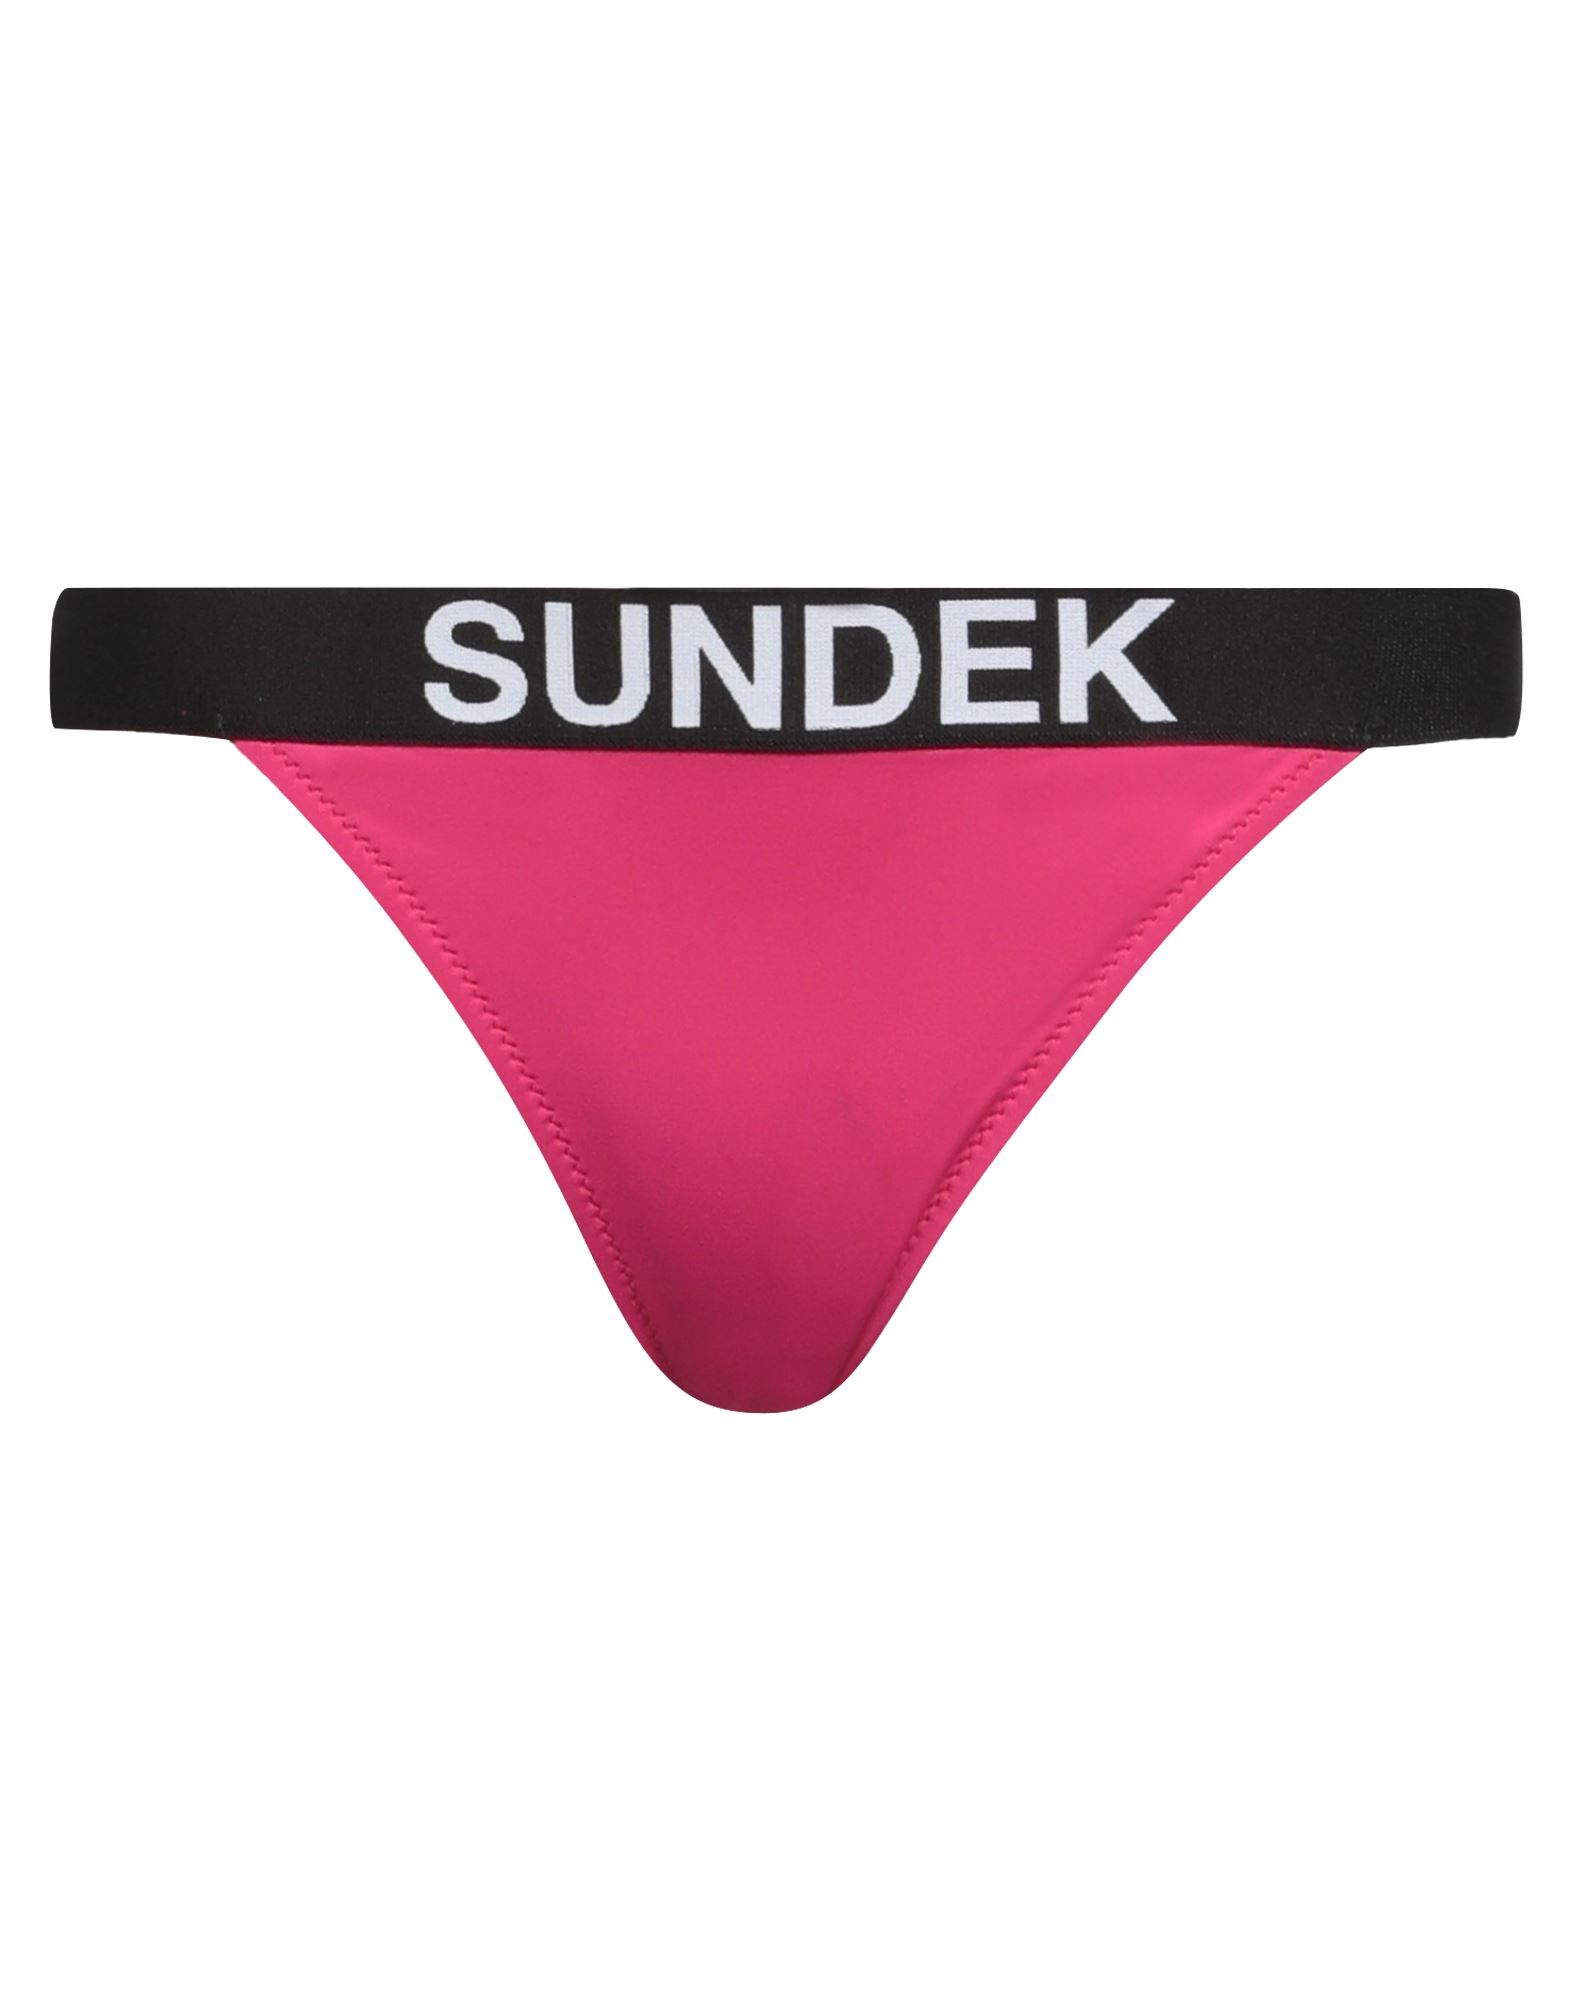 SUNDEK Bikinislip & Badehose Damen Fuchsia von SUNDEK